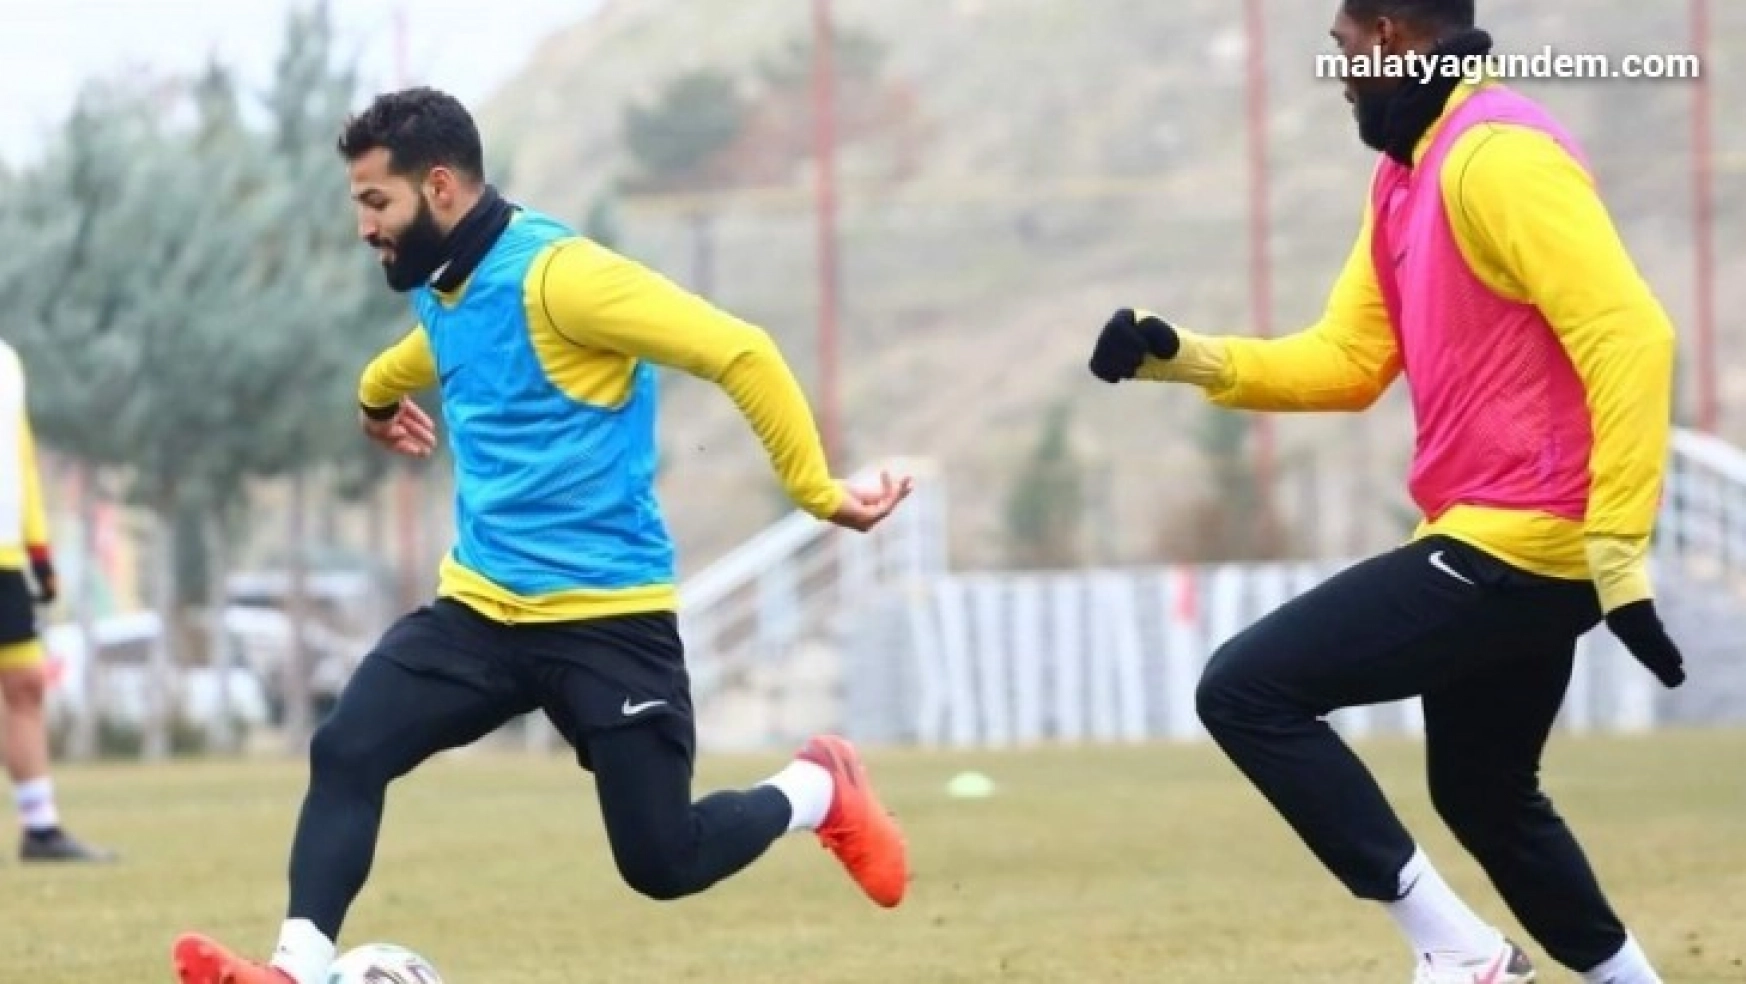 Yeni Malatyaspor, Kayserispor maçına hazır